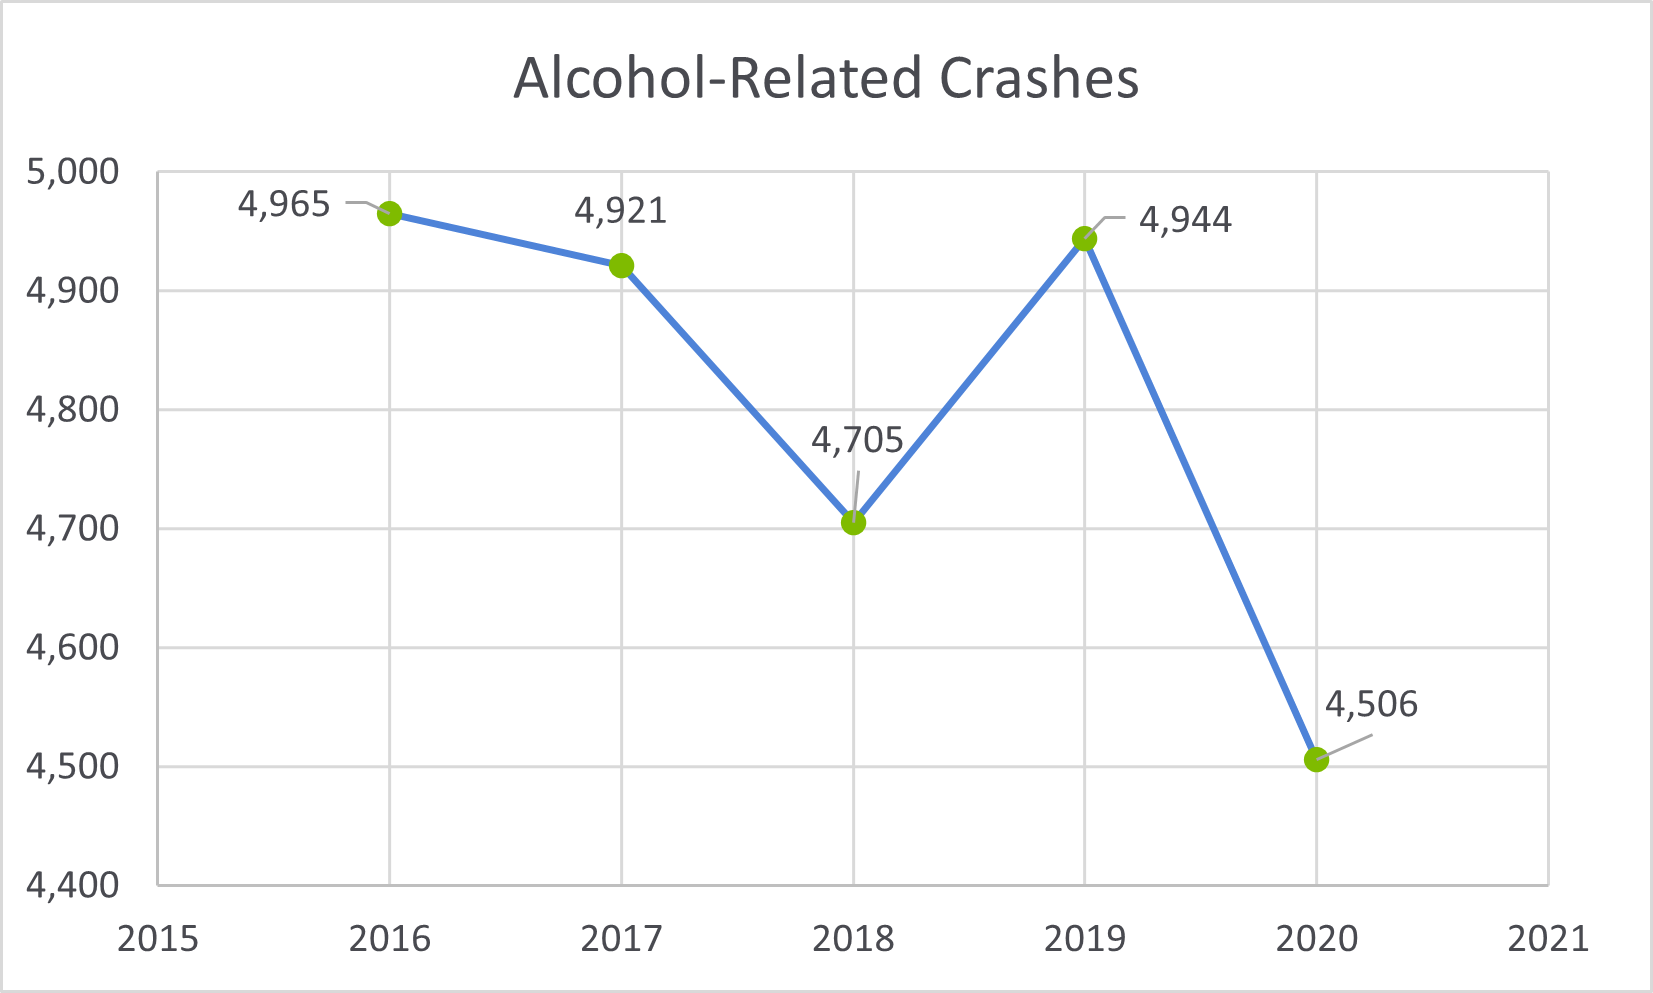 Alcohol-Related Crashes in Arizona